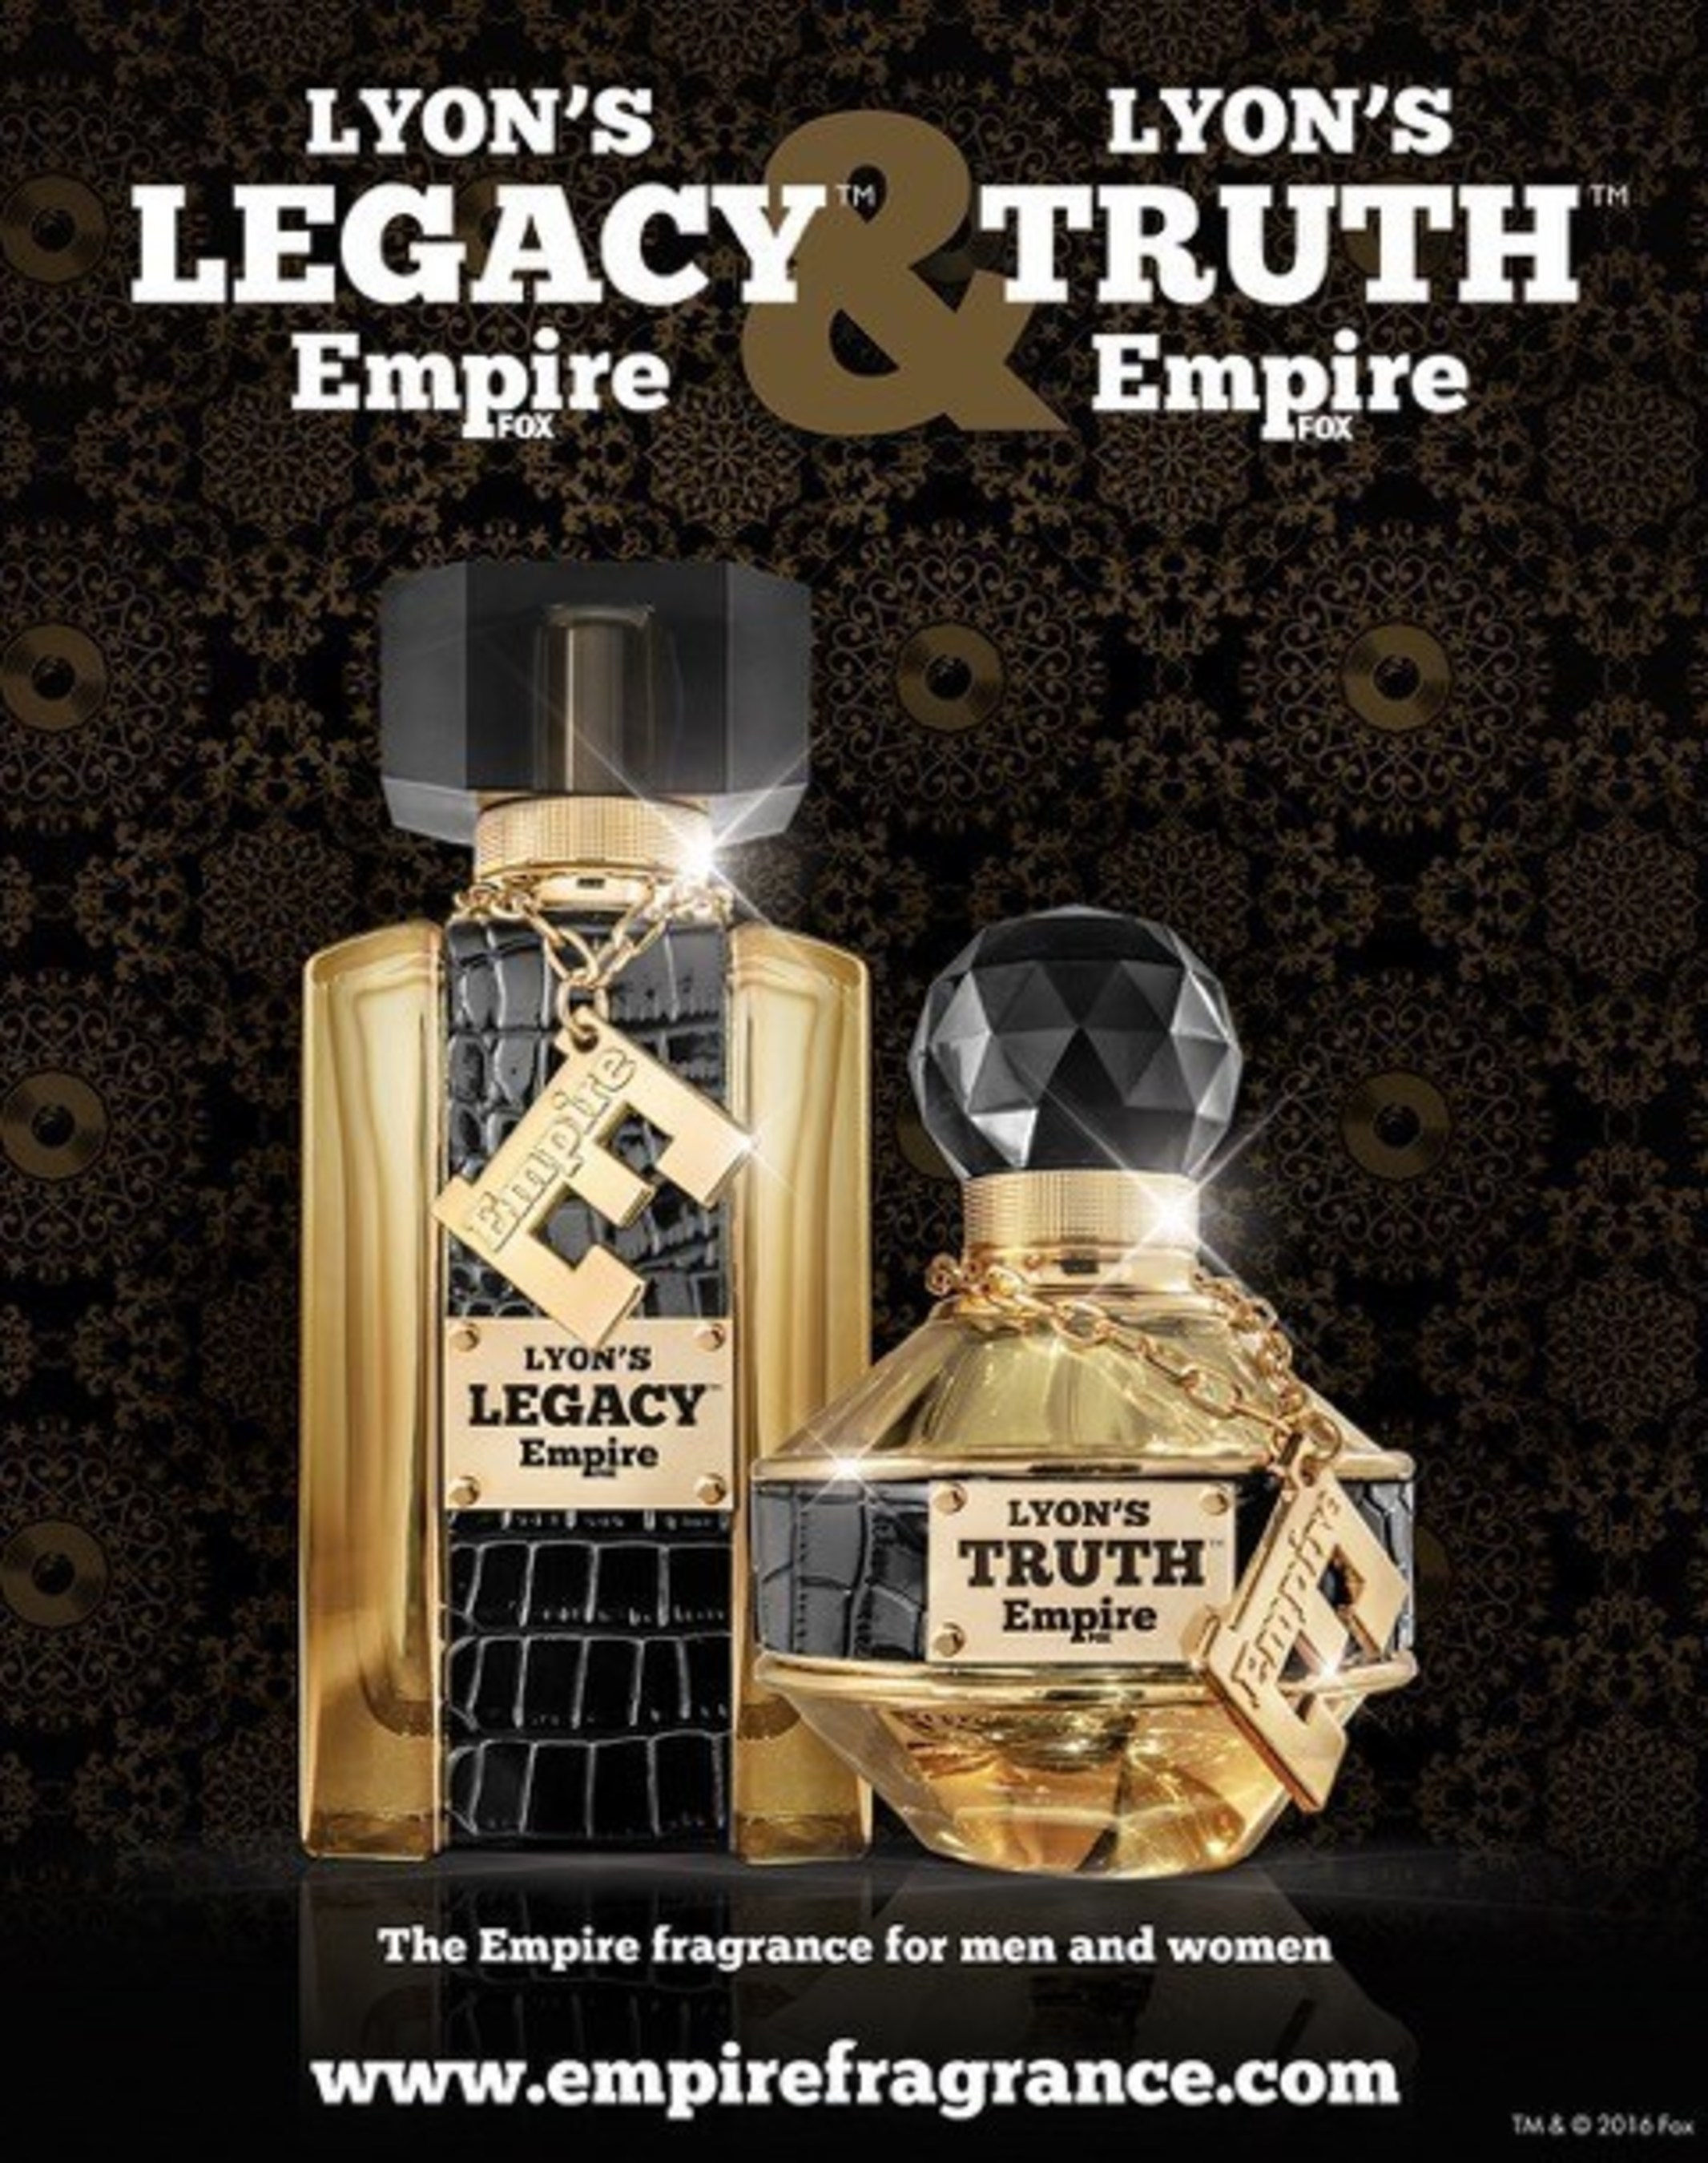 Simon James London Launches Two New EMPIRE Fragrances